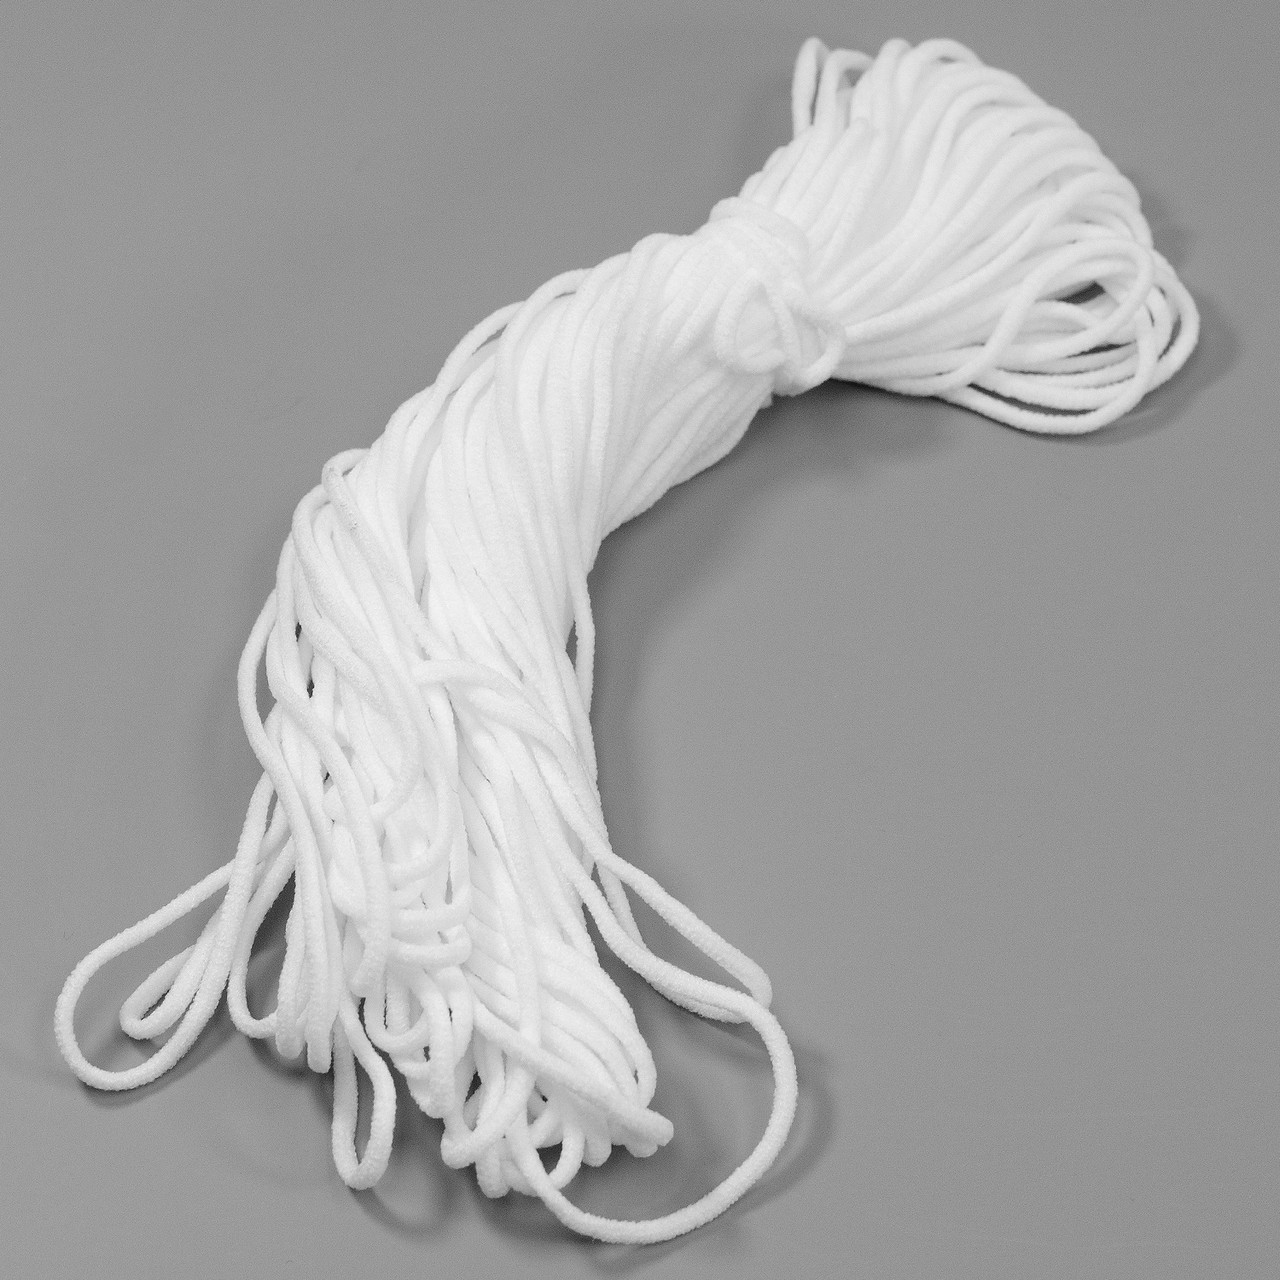 Usew 1/8-Inch (3mm) White Heavy Stretch Round String Elastic Cord (Cut of 10 Yards)